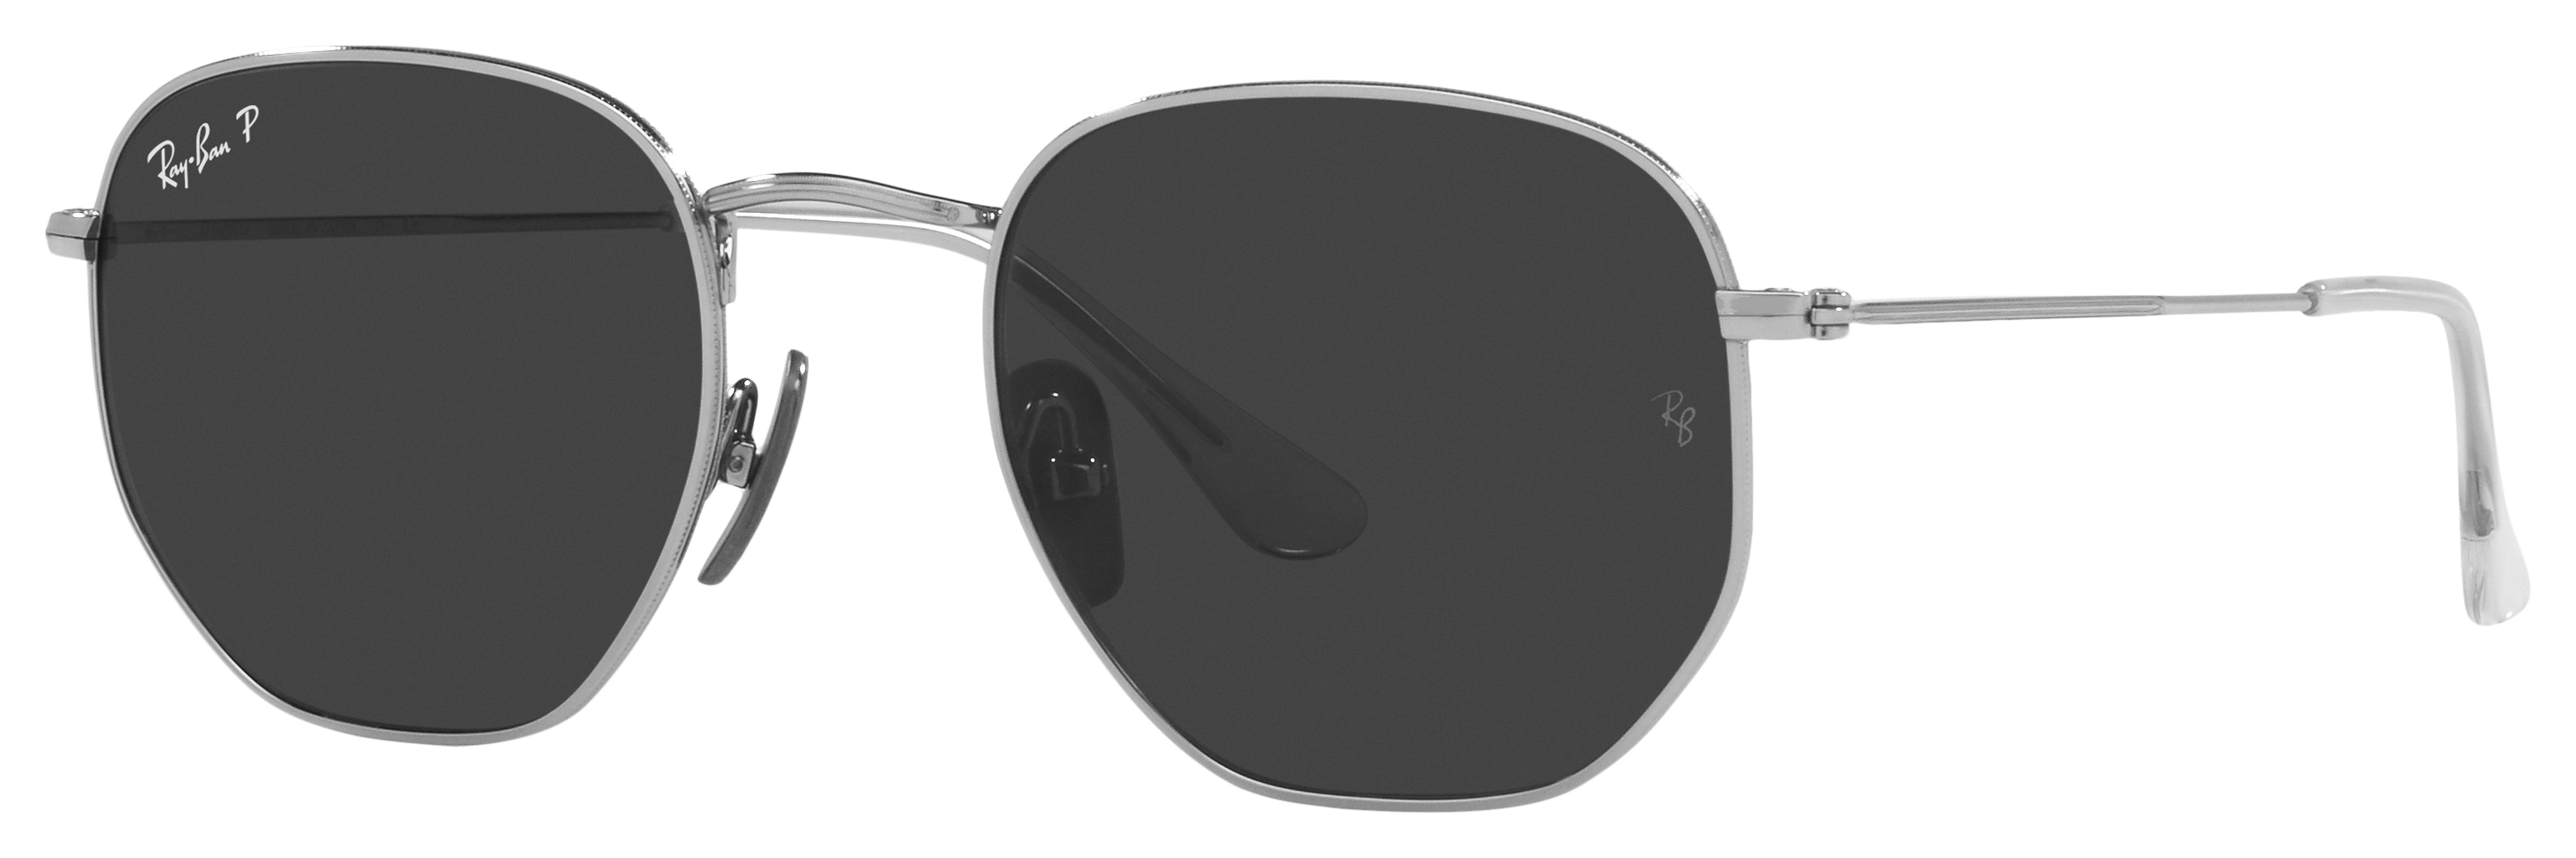 Ray-Ban Hexagonal Titanium RB8148 Glass Polarized Sunglasses - Polished Silver/Gray Classic - Medium